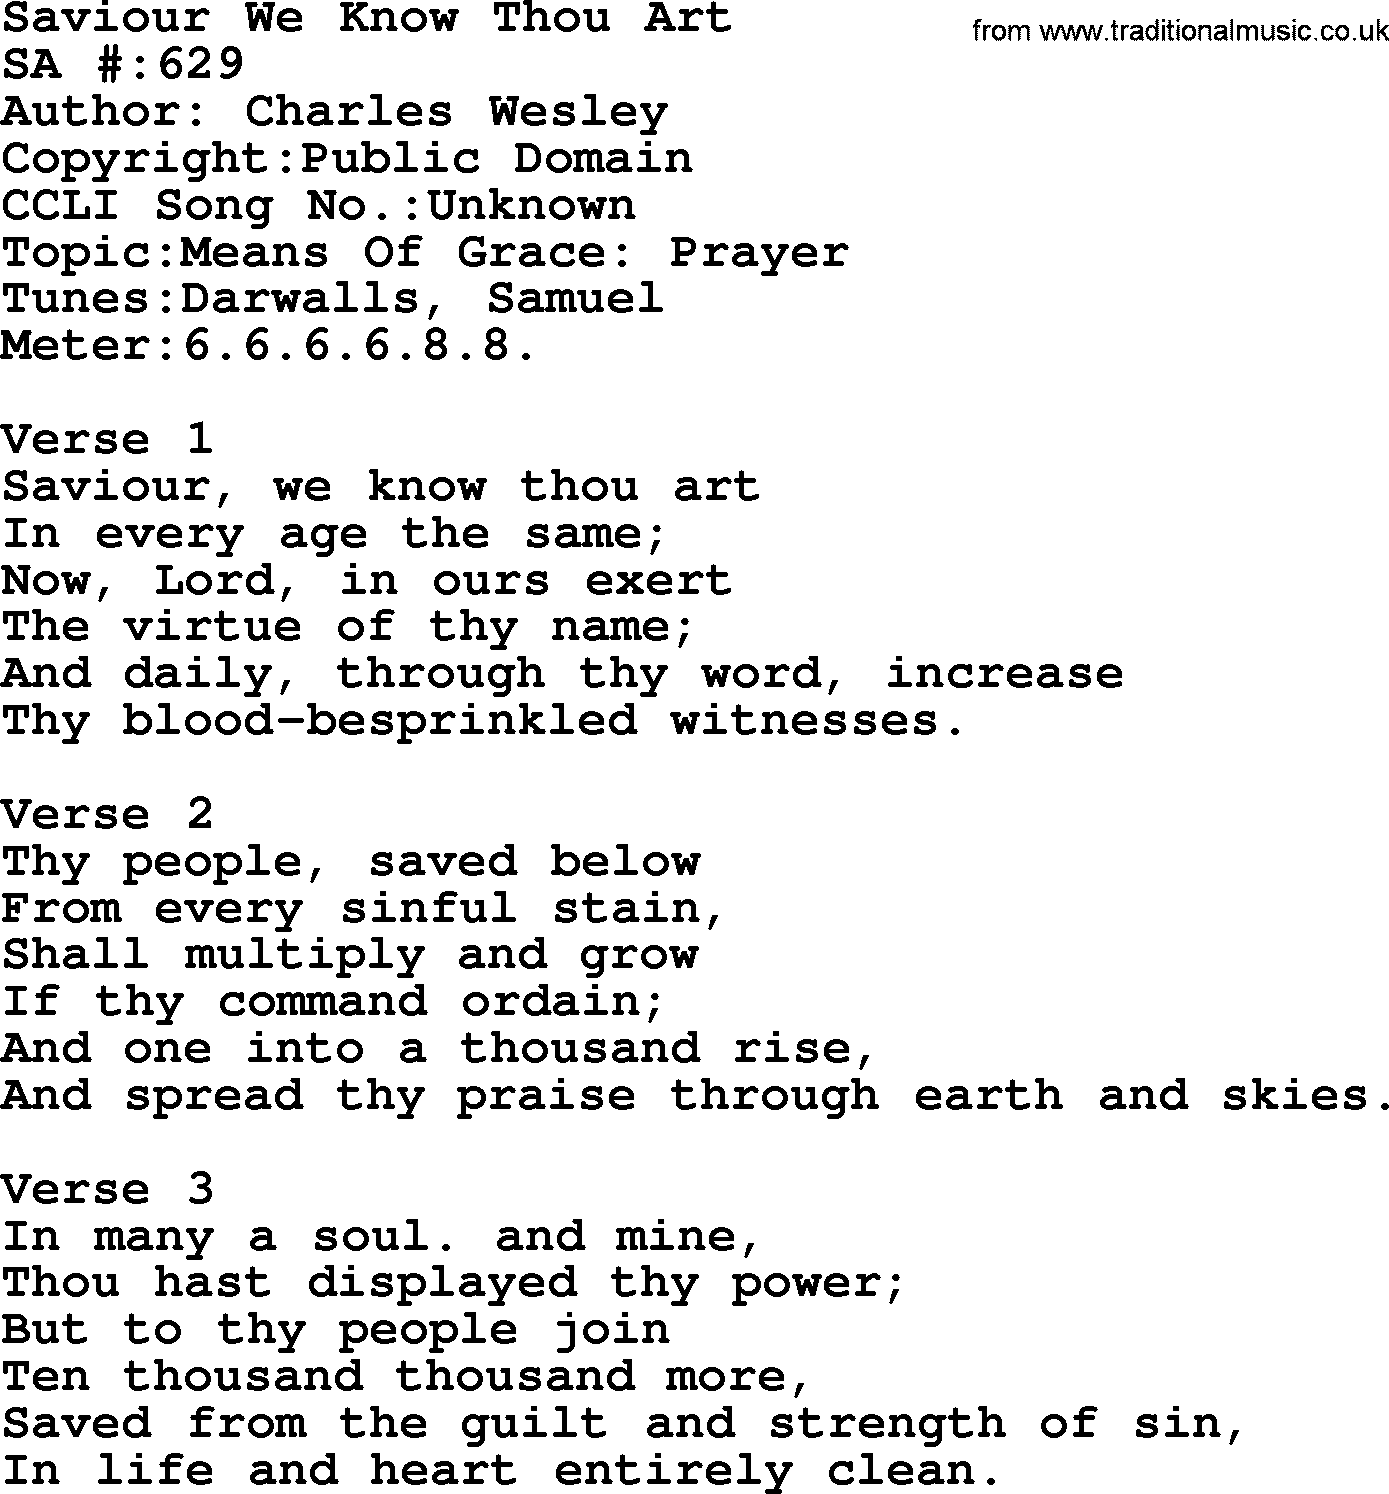 Salvation Army Hymnal, title: Saviour We Know Thou Art, with lyrics and PDF,